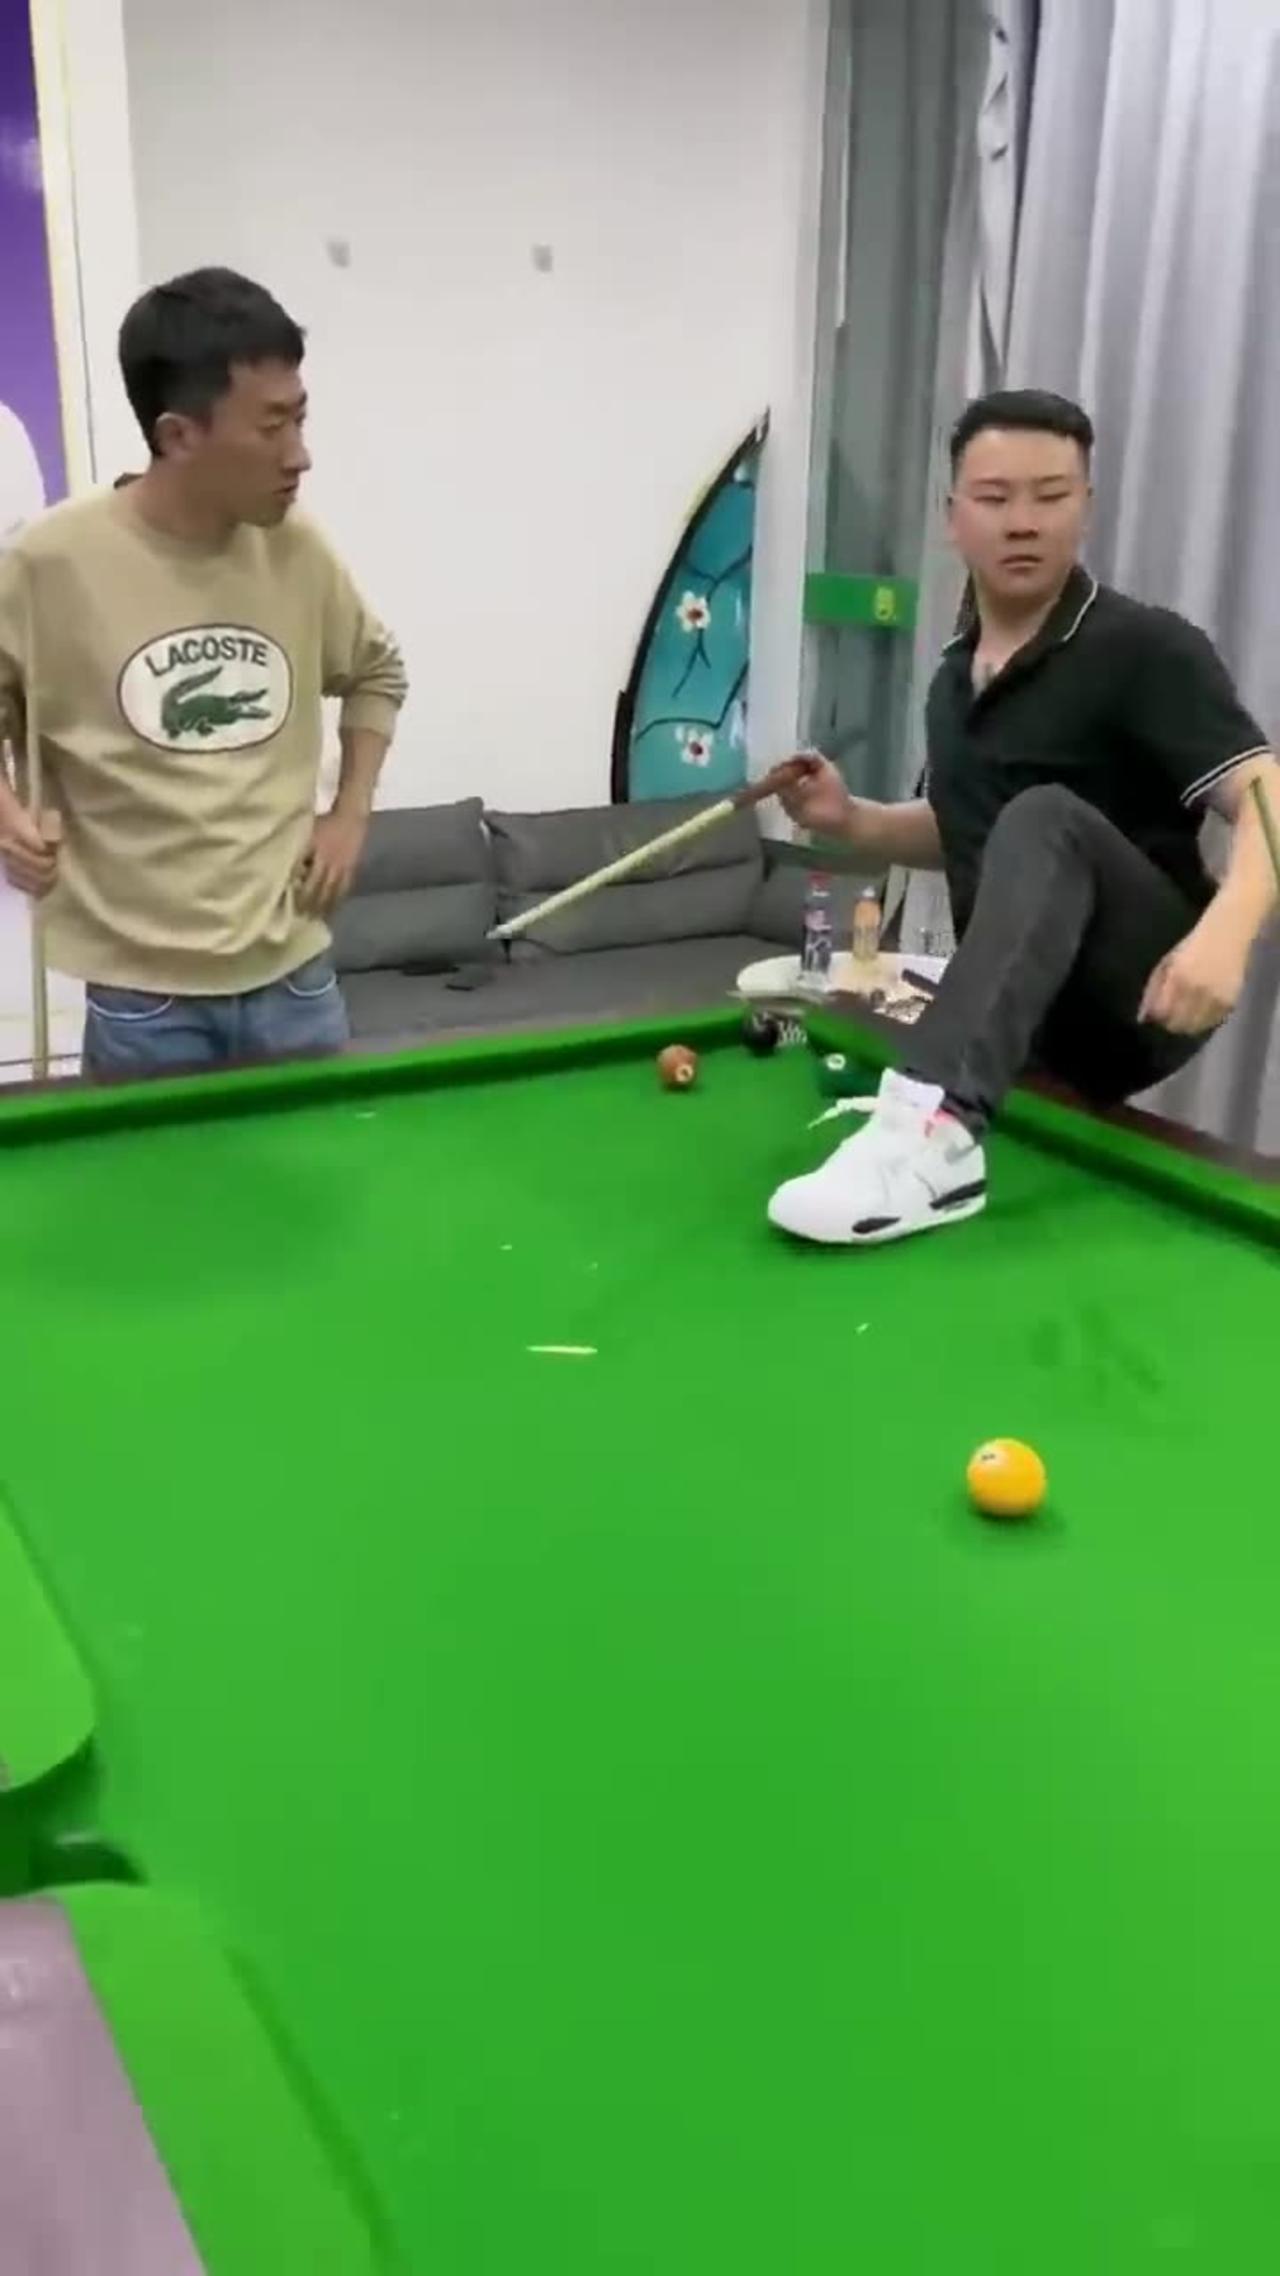 Funny Pool video